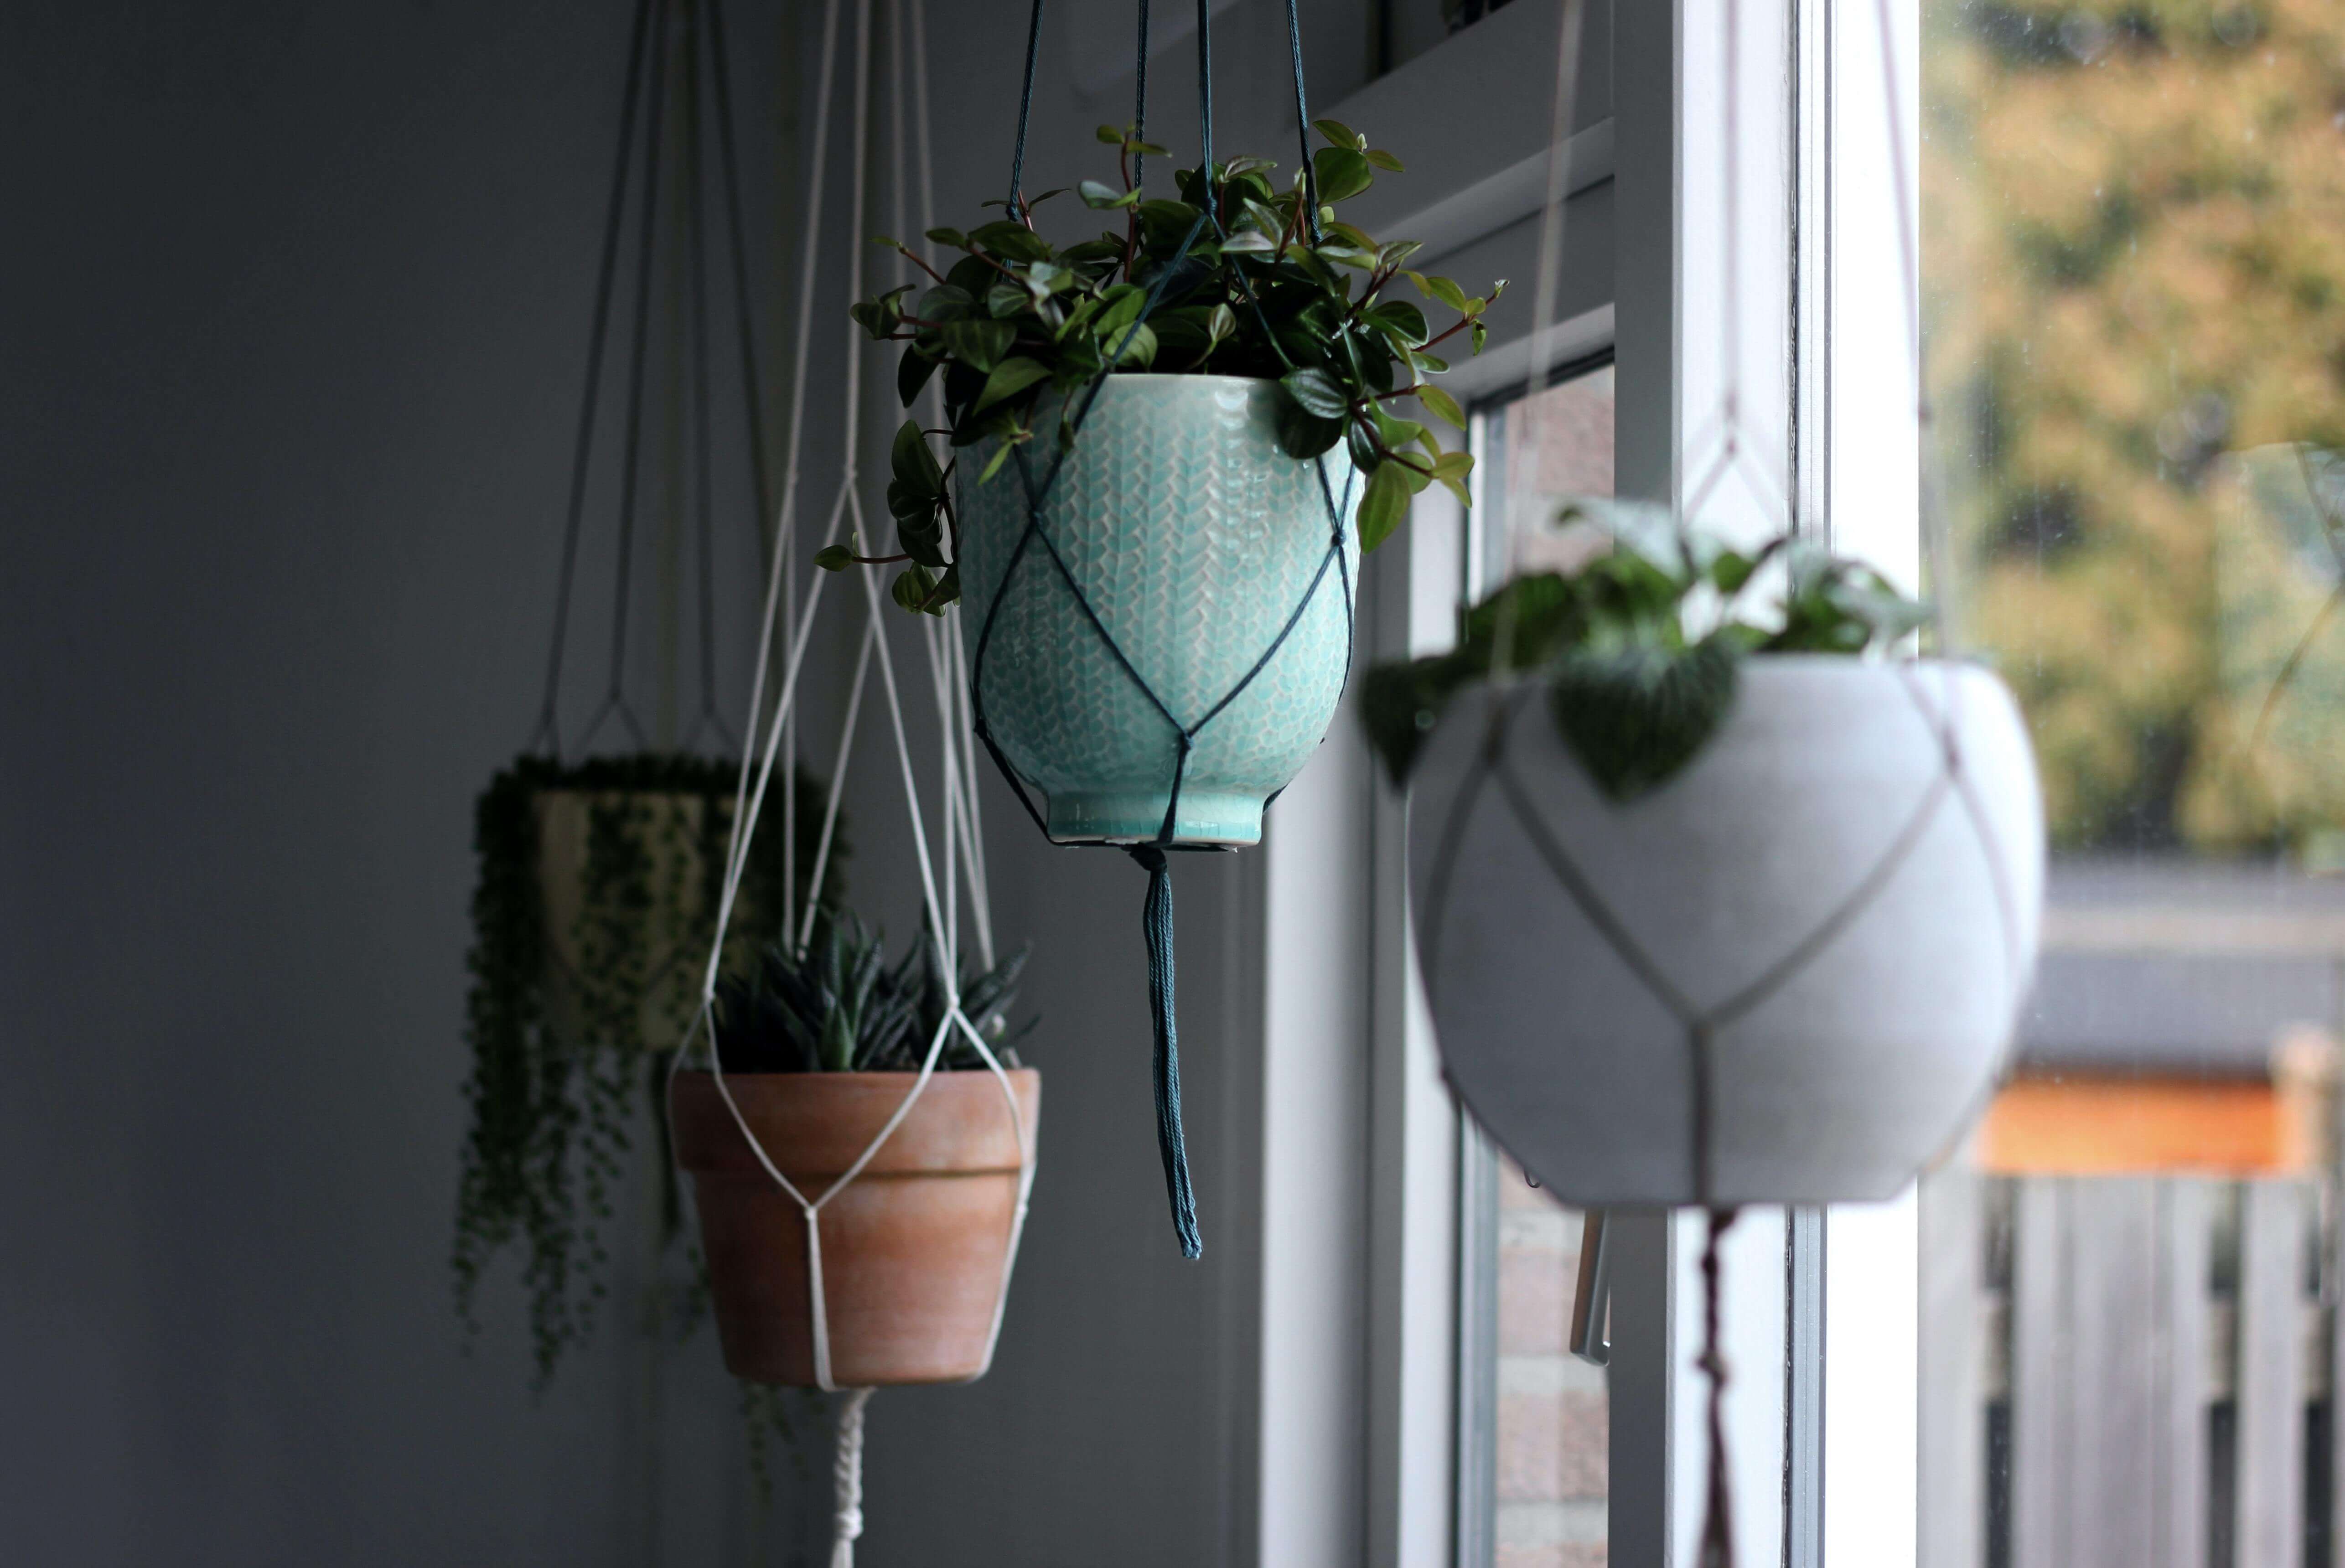 Hanging plants in pots